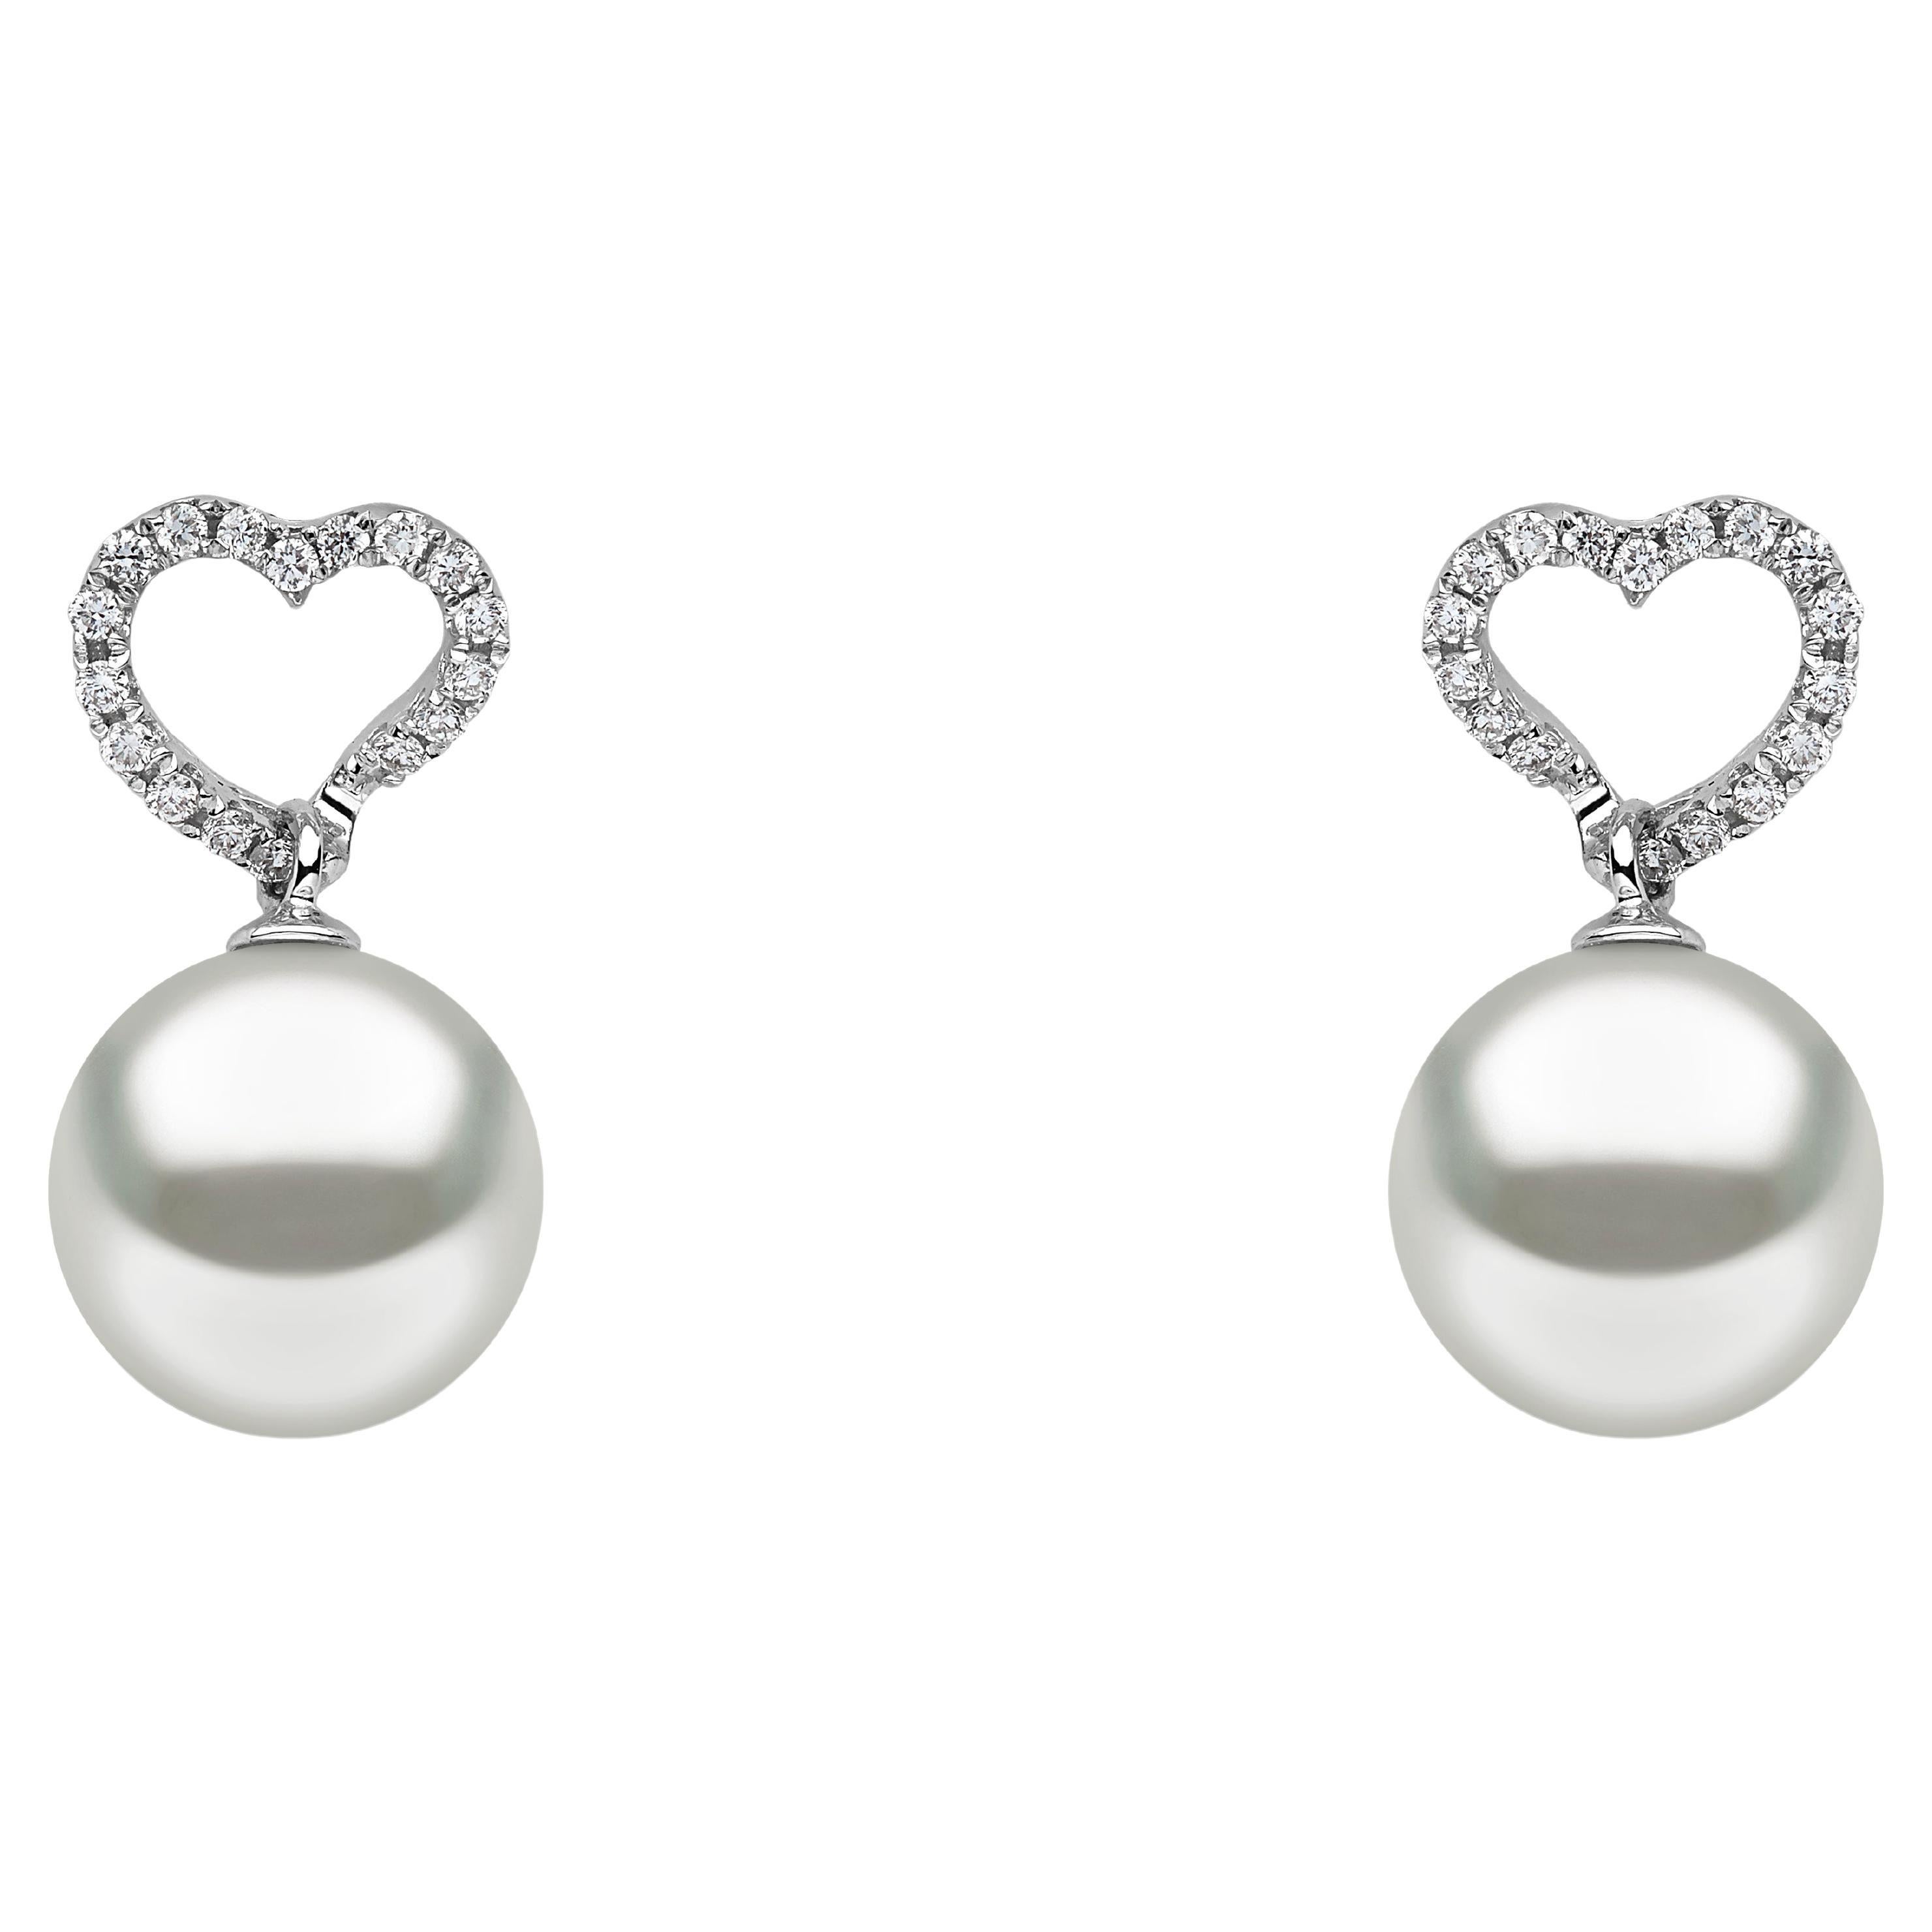 Yoko London South Sea Pearl and Diamond Earrings in 18 Karat White Gold For Sale